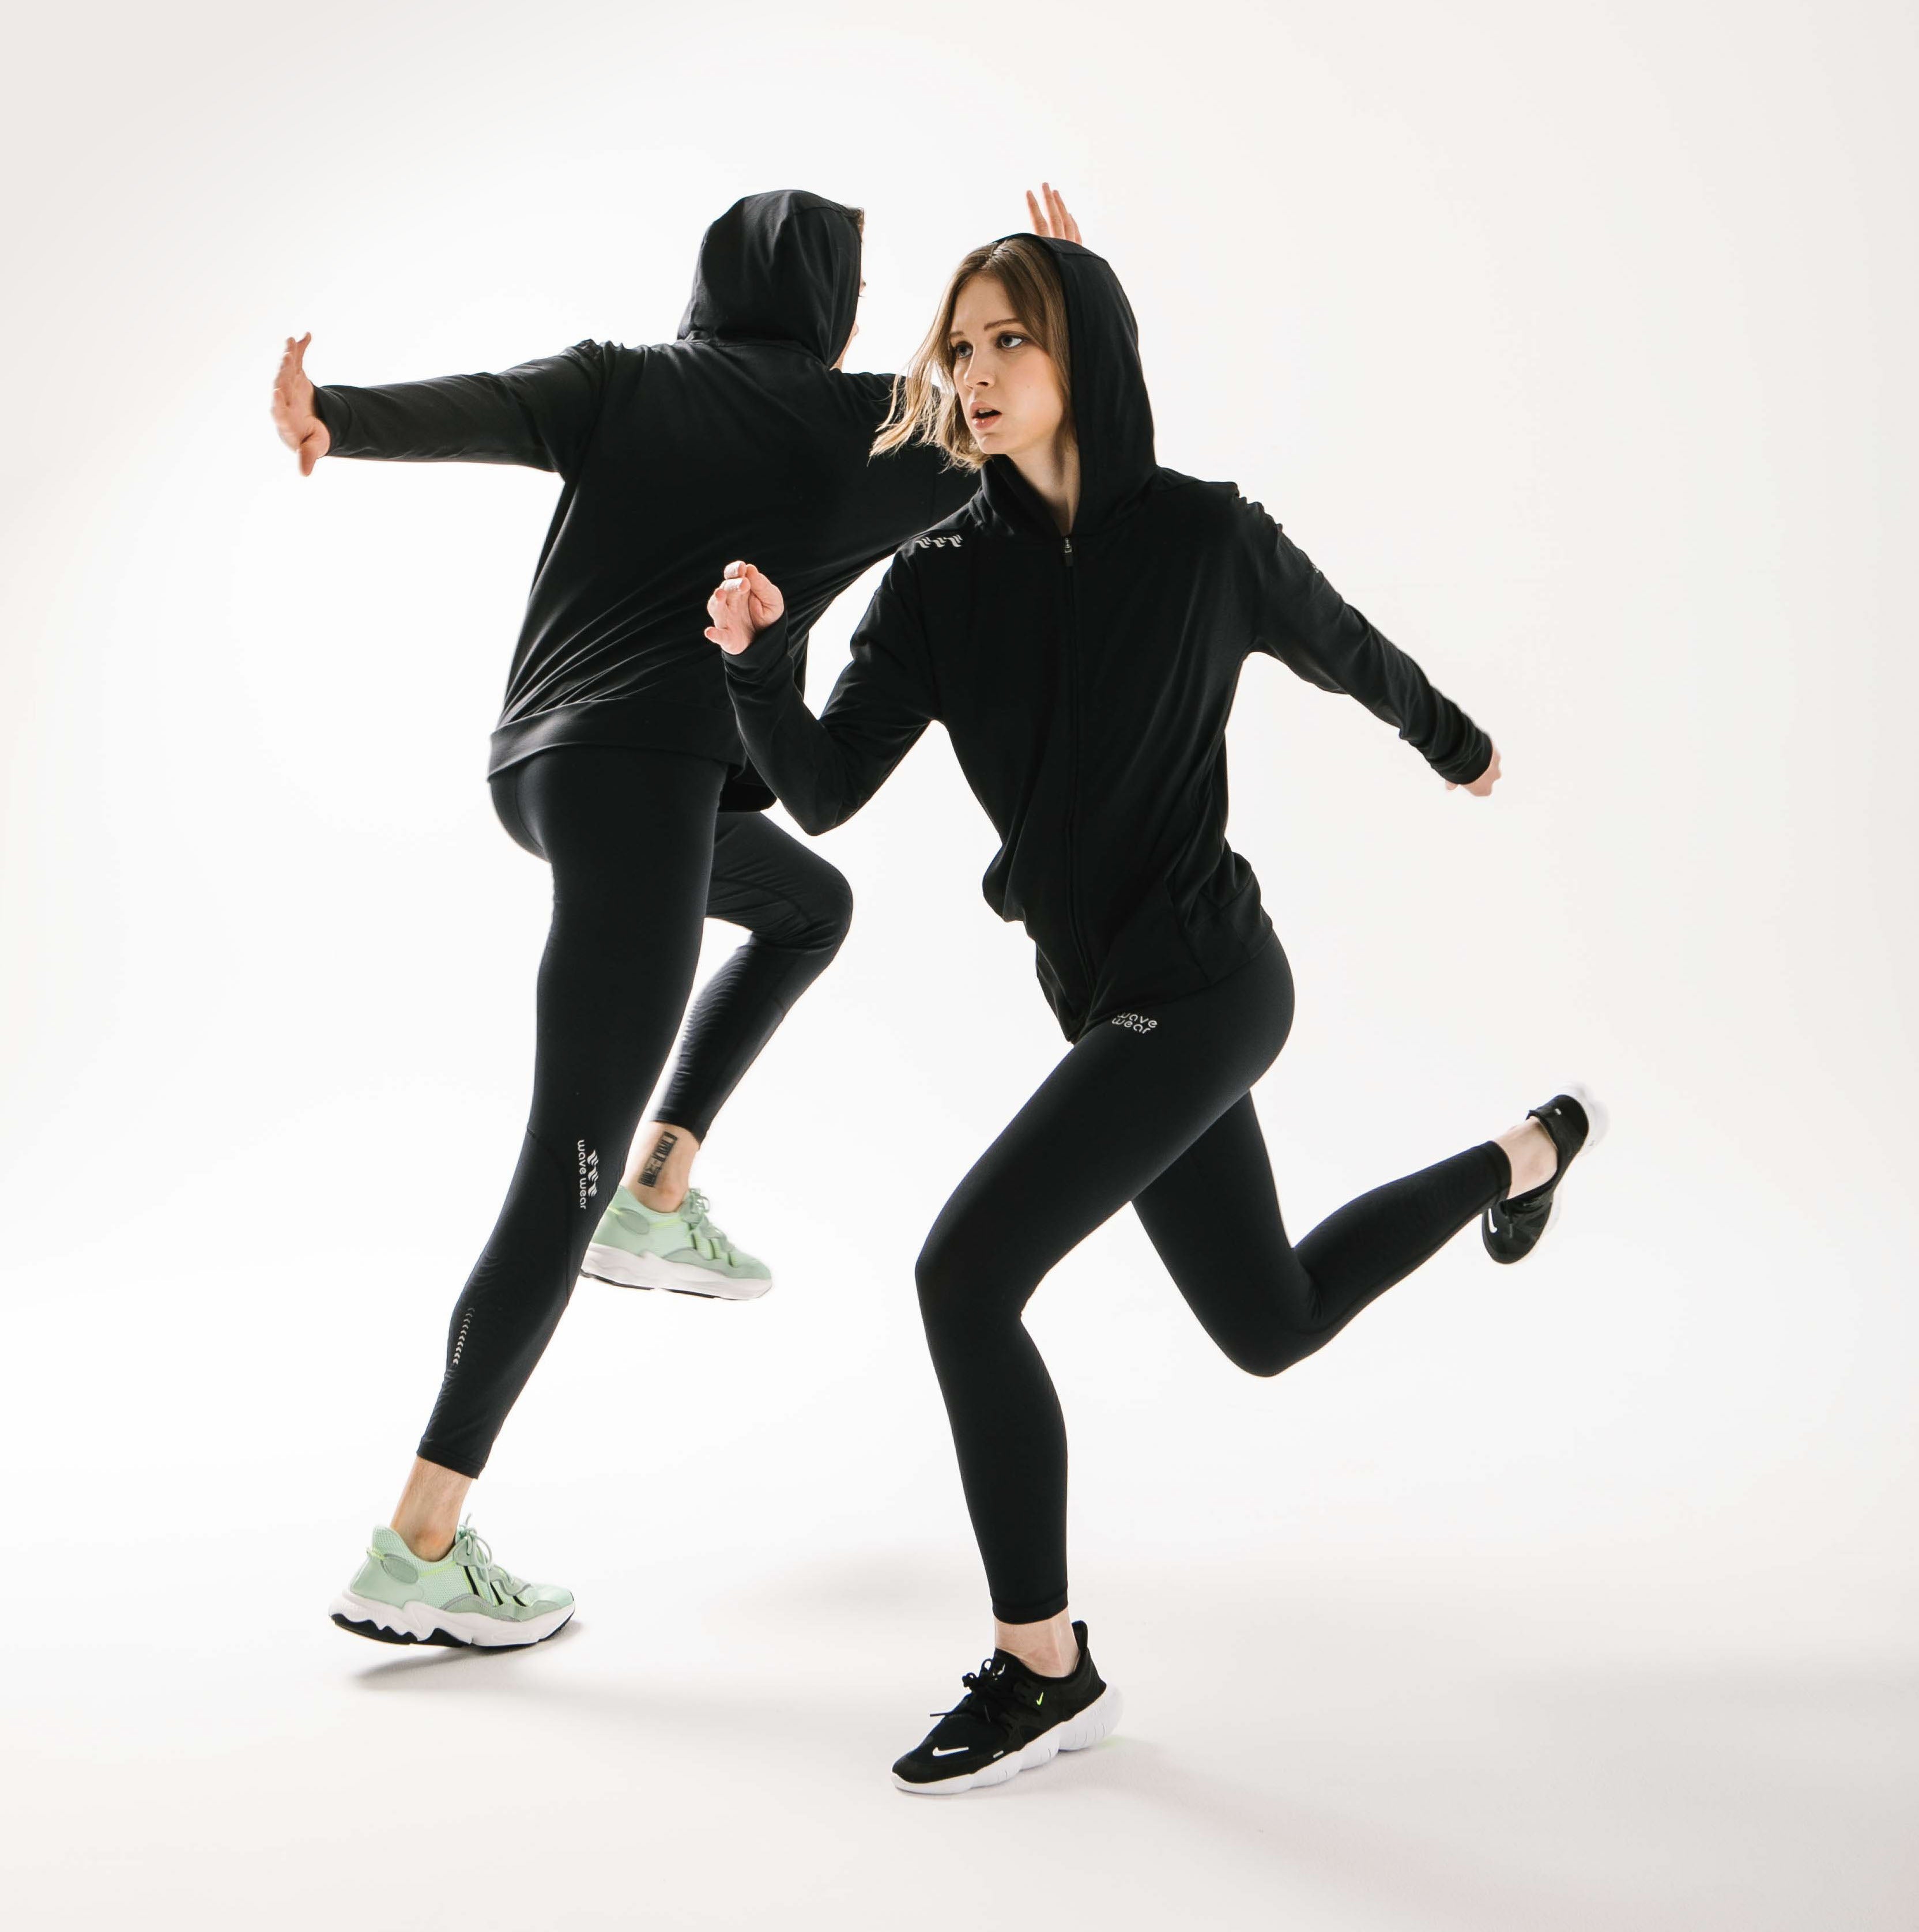 Wavewear Leggings: Elevate Your Performance to New Heights